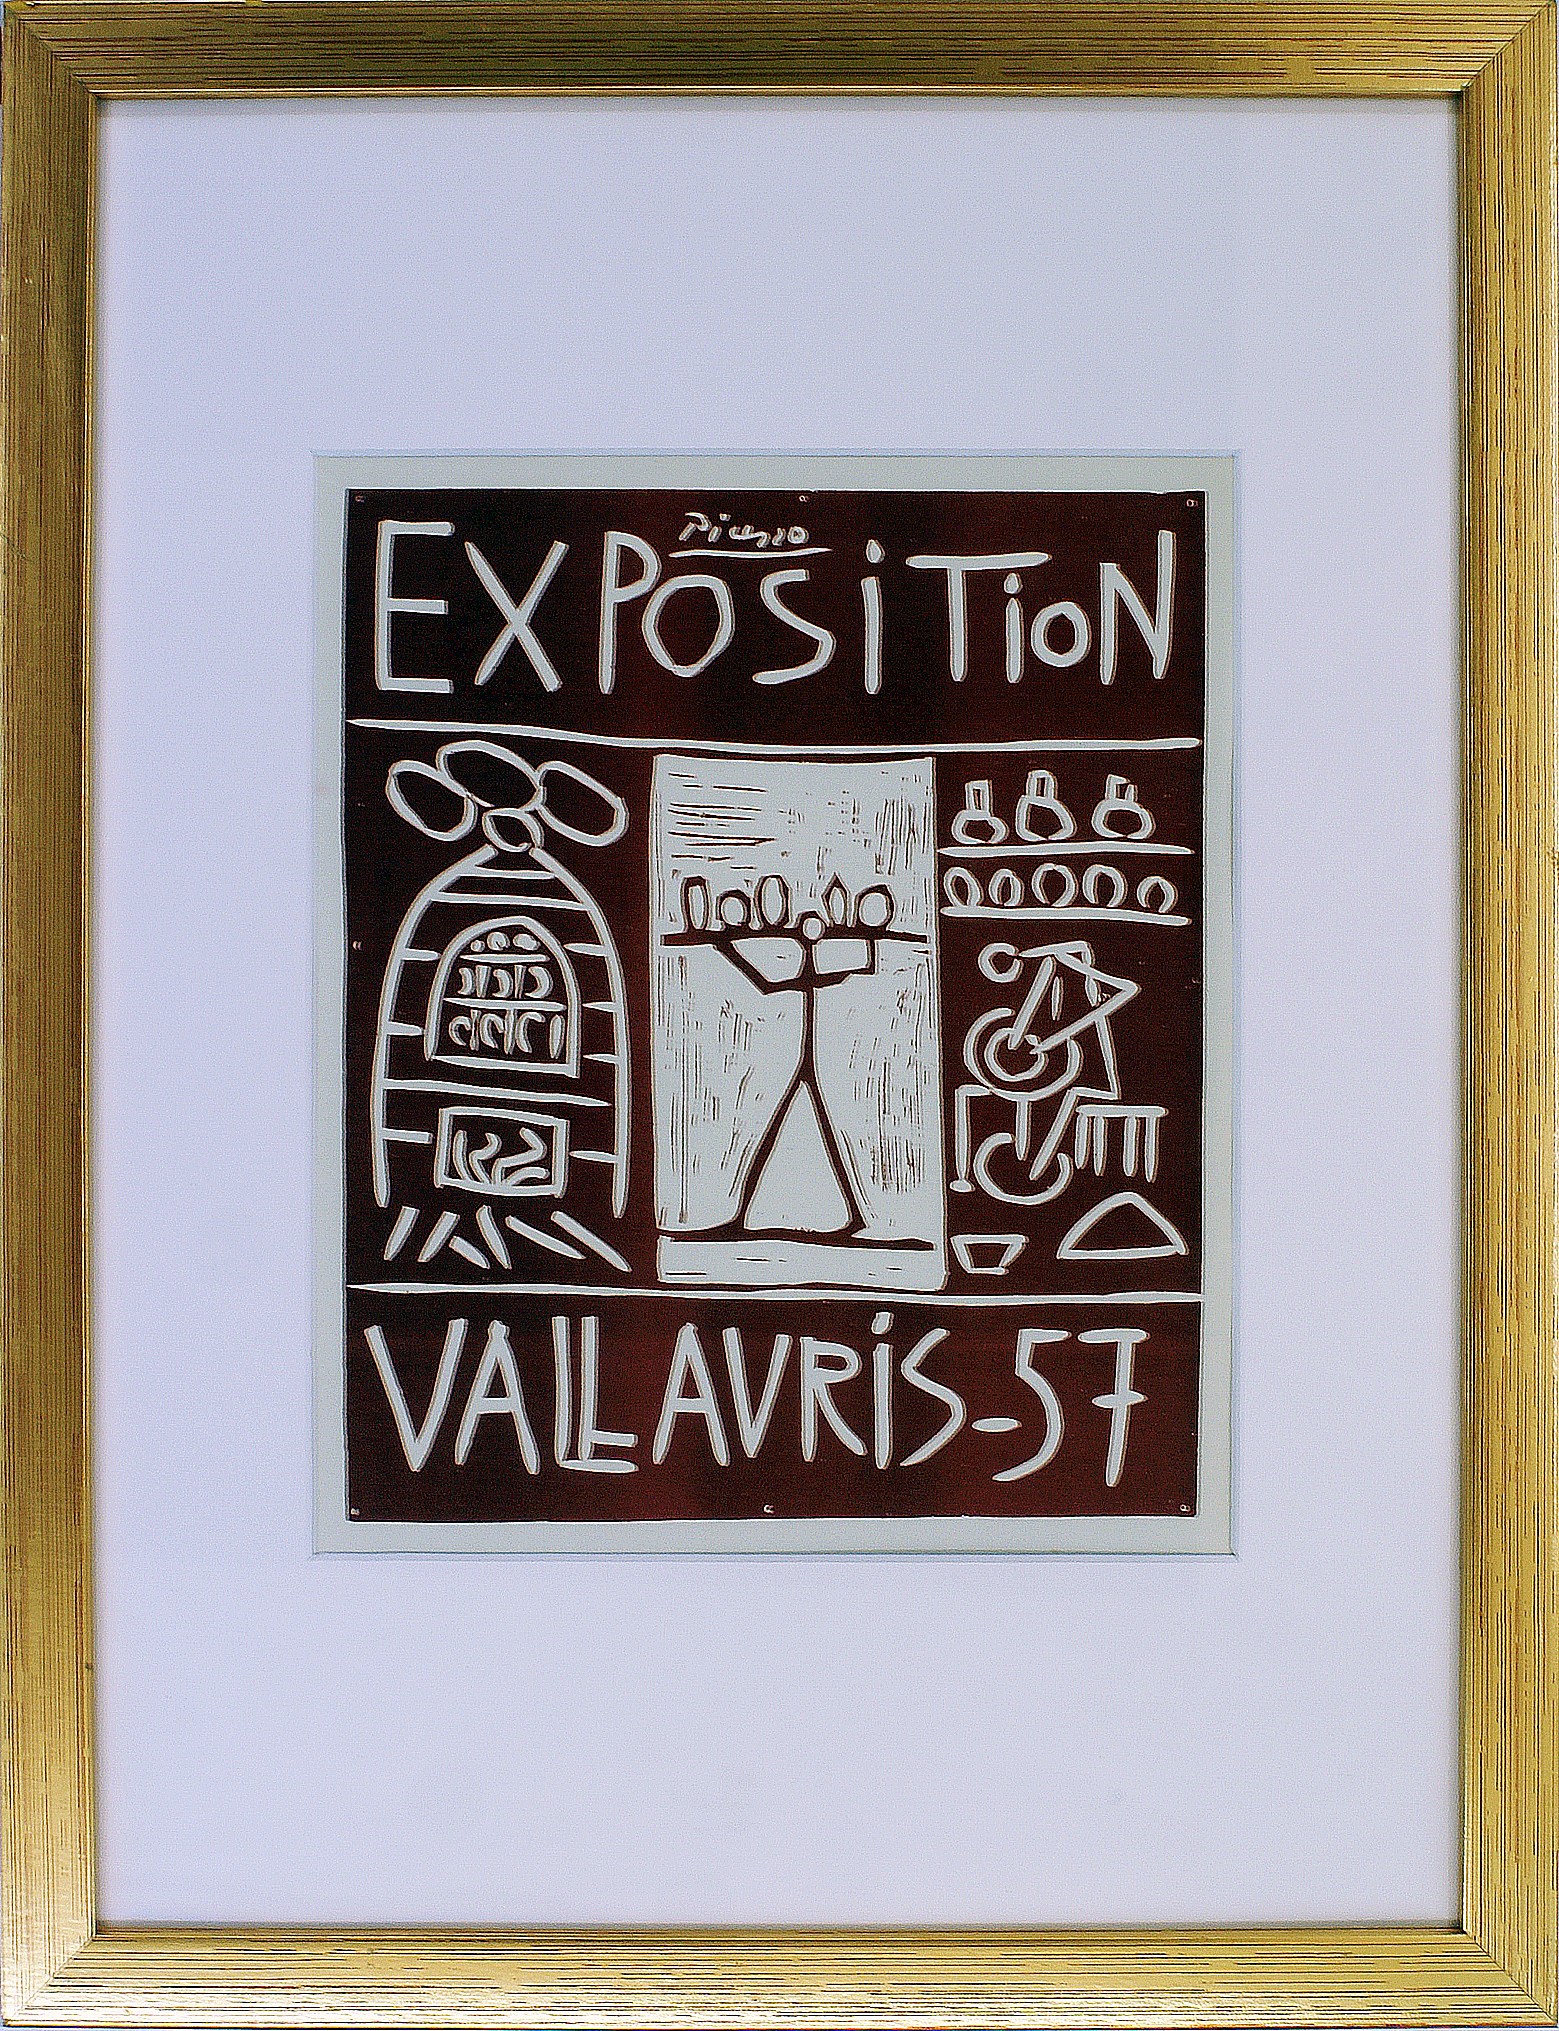 EXPOSITION VALLAURIS 57